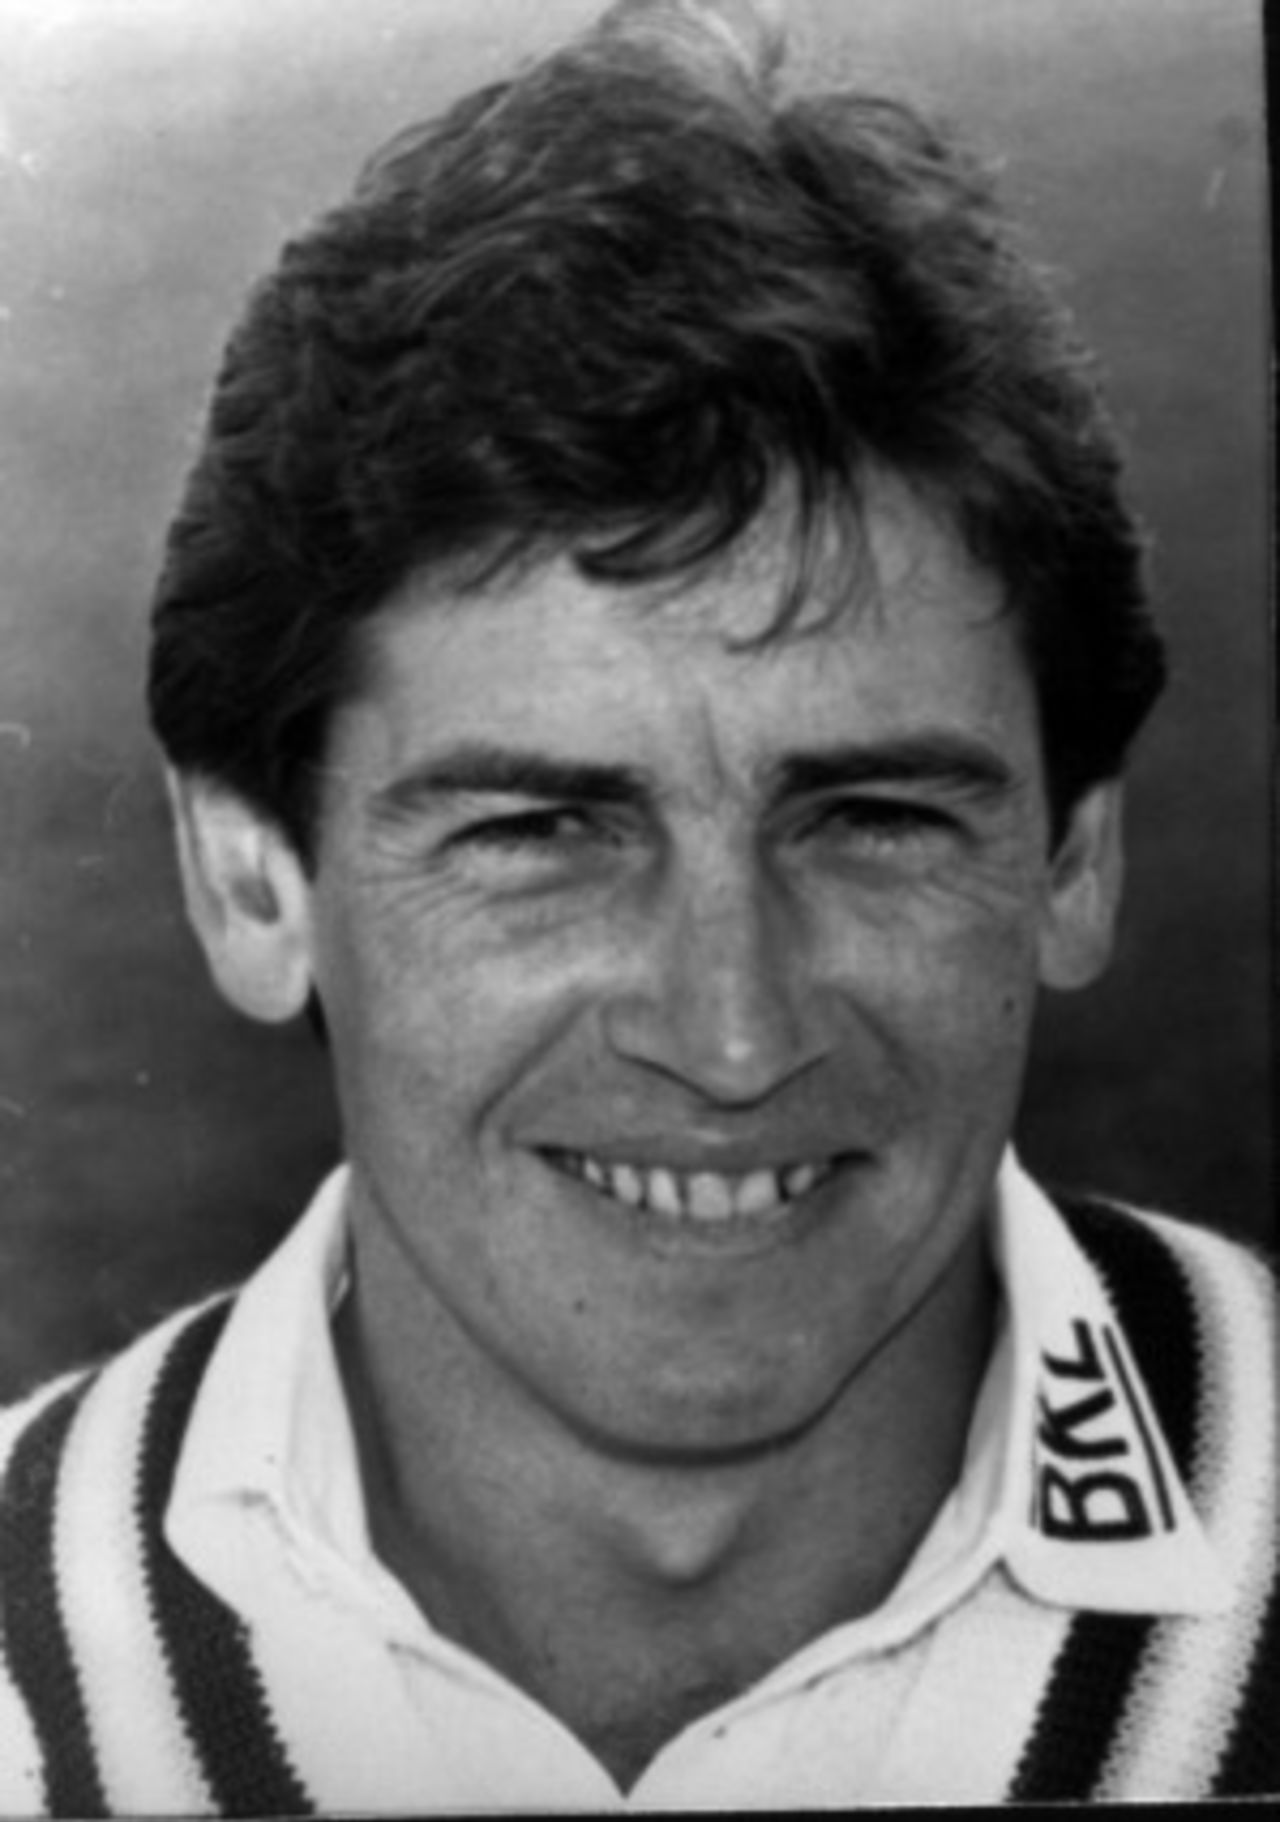 S.T.Jefferies, Hampshire cricketer 1988-1989